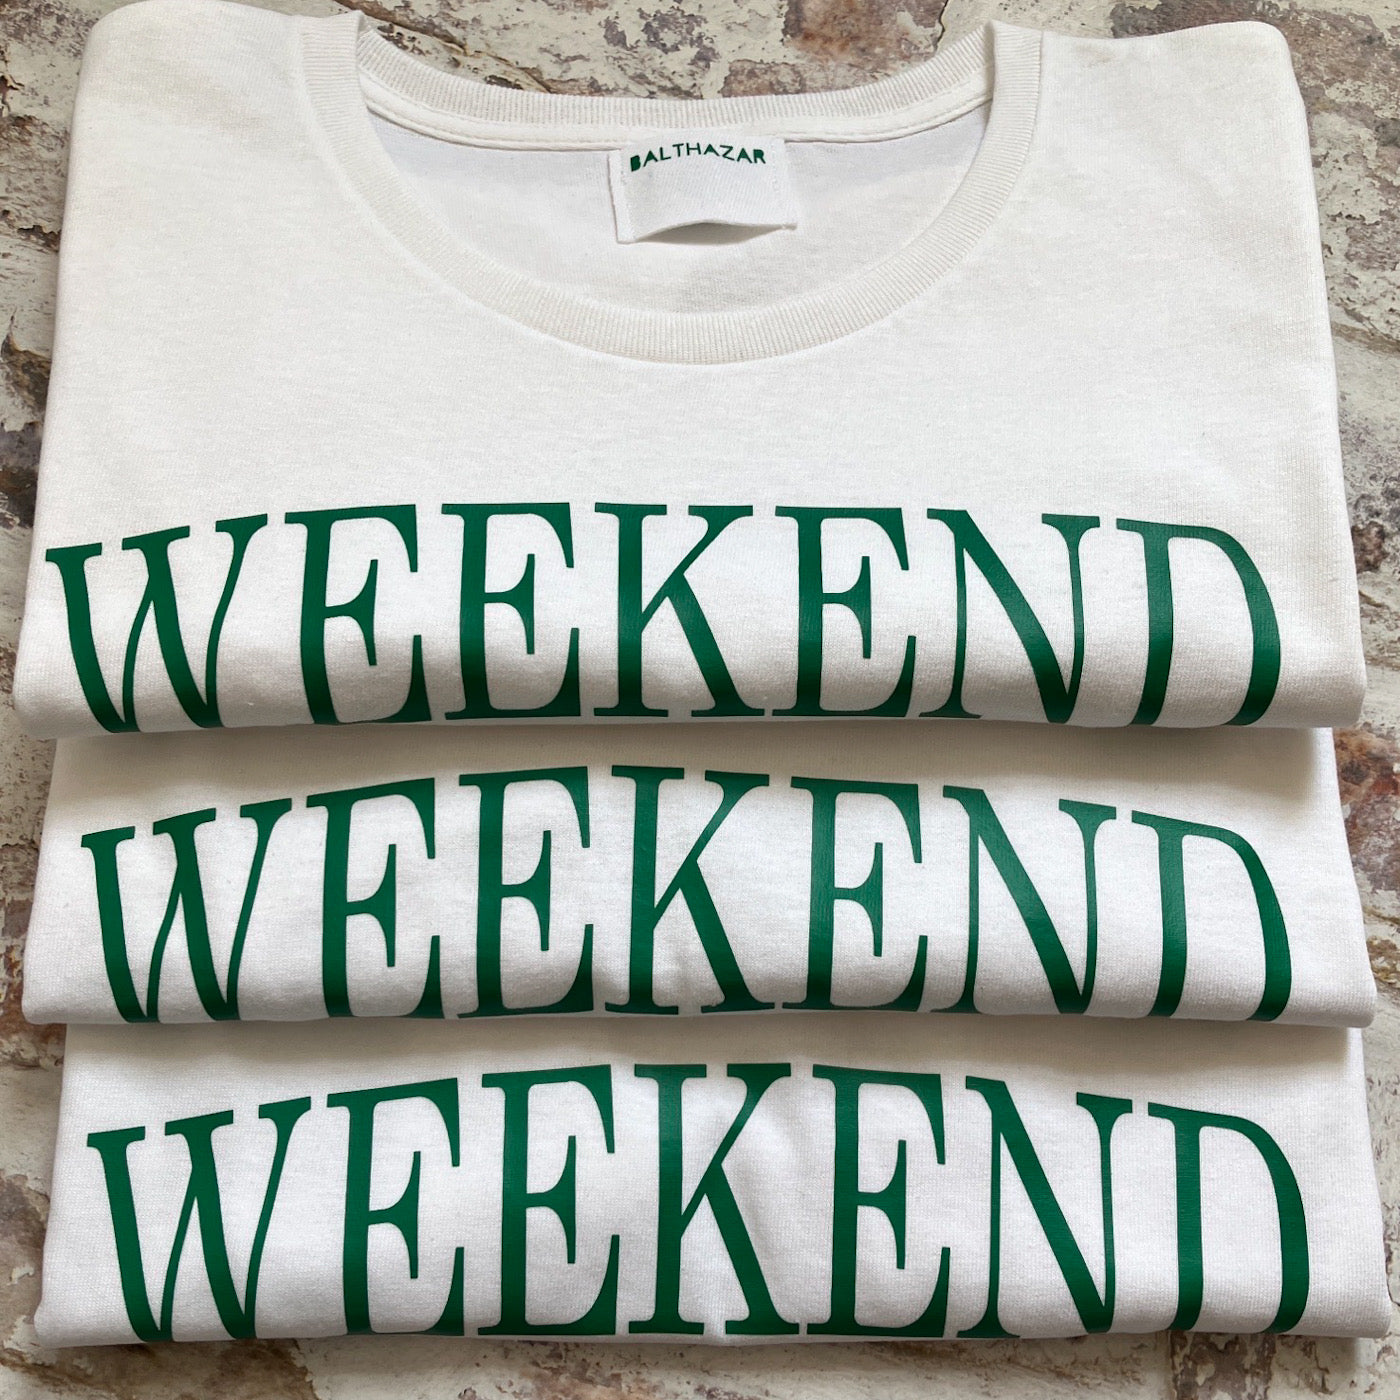 Weekend T-Shirt | White | Green